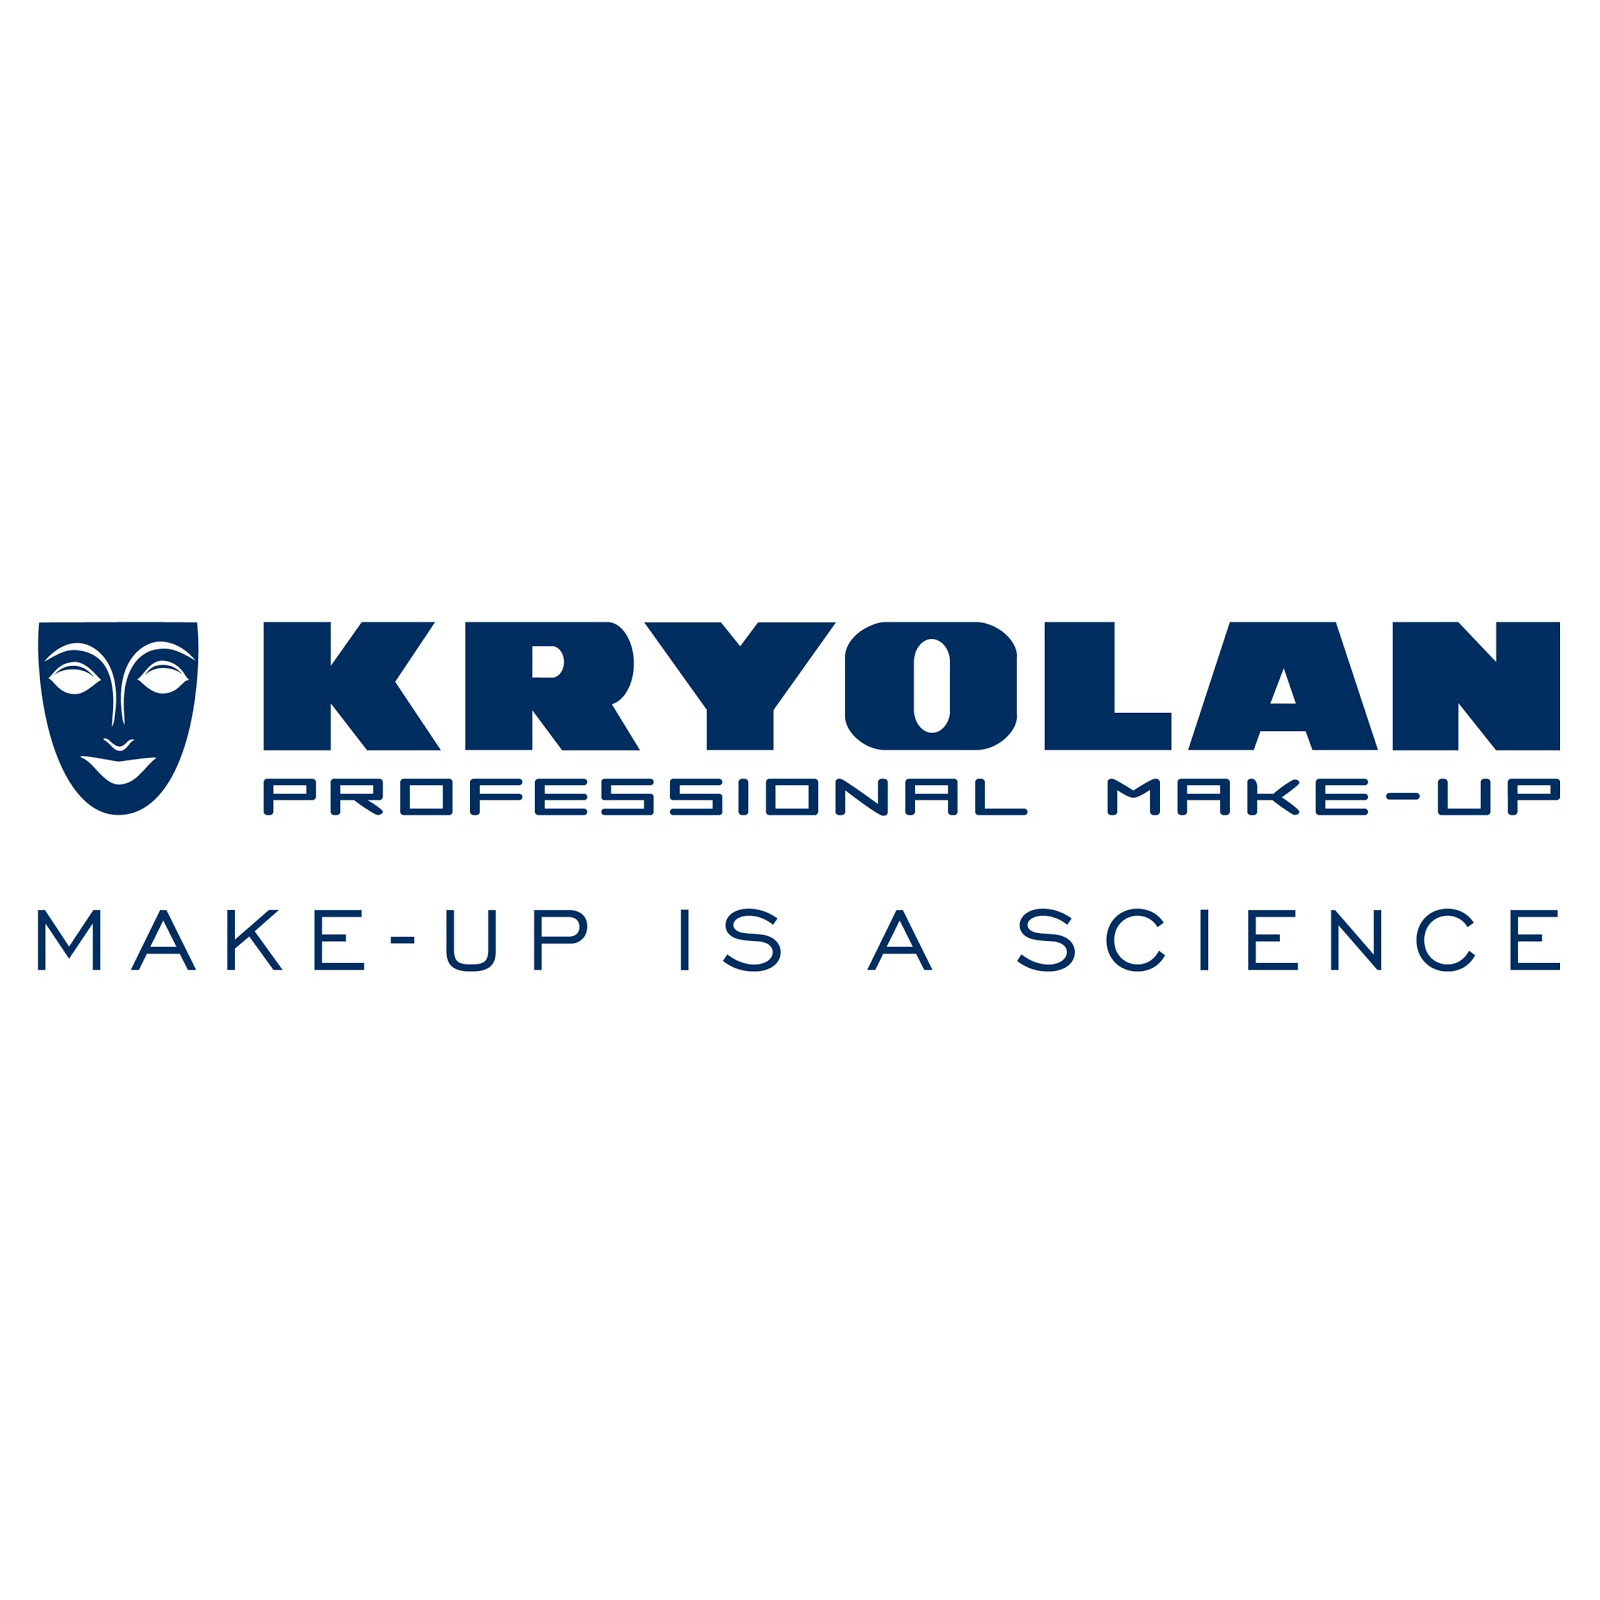 Buy Kryolan Products at best price Online in Pakistan